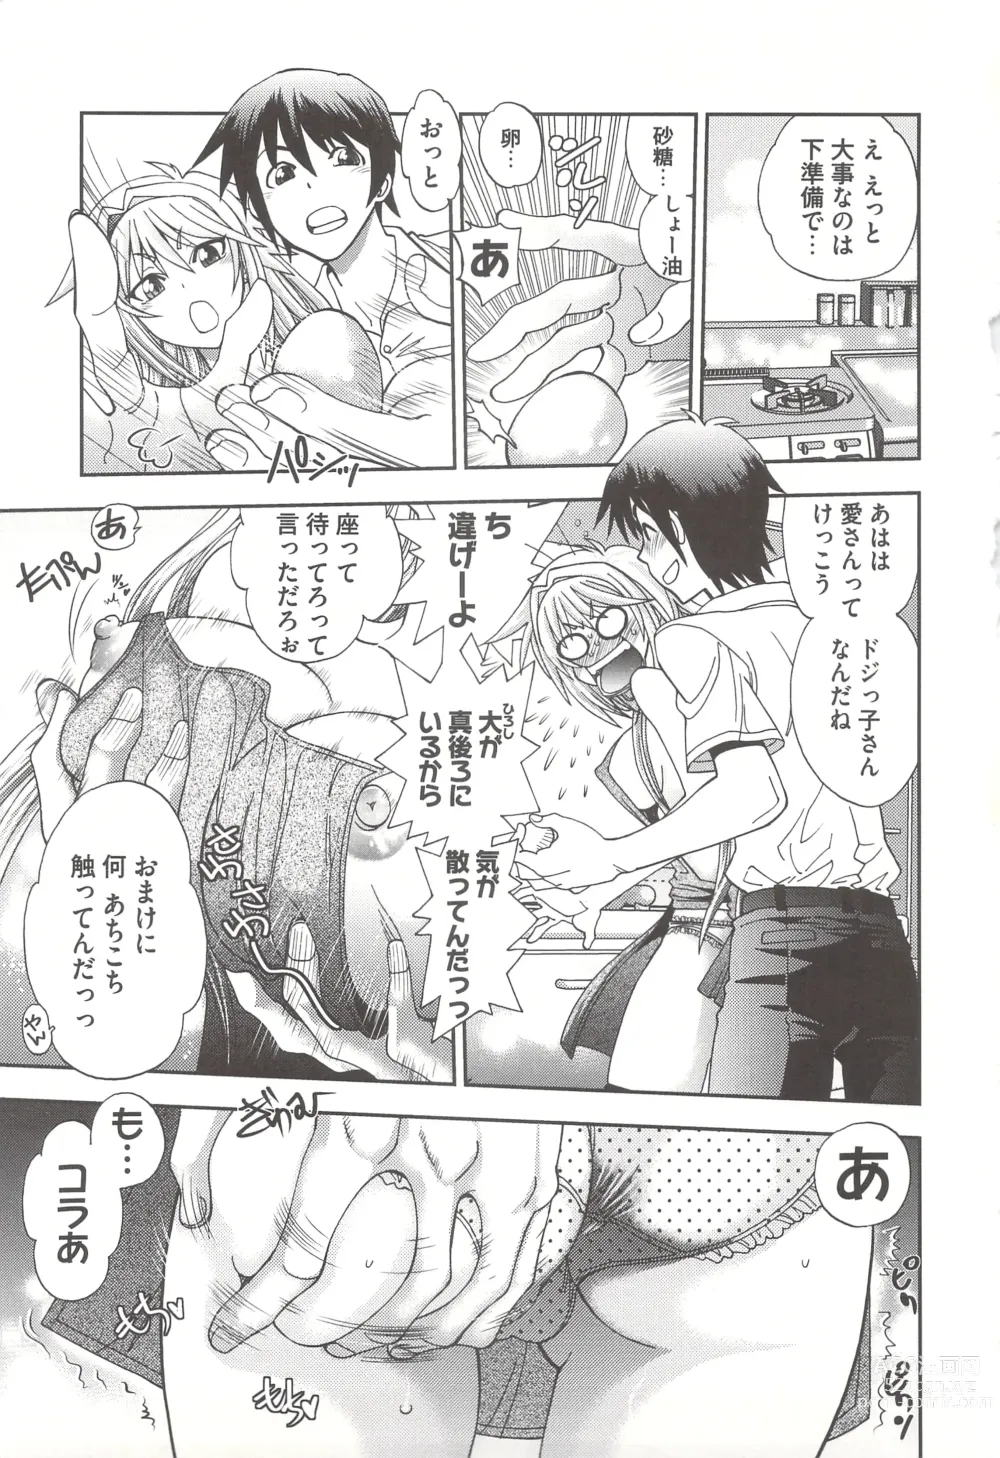 Page 15 of manga Tsujidou-san no Virgin Road Adult Edition